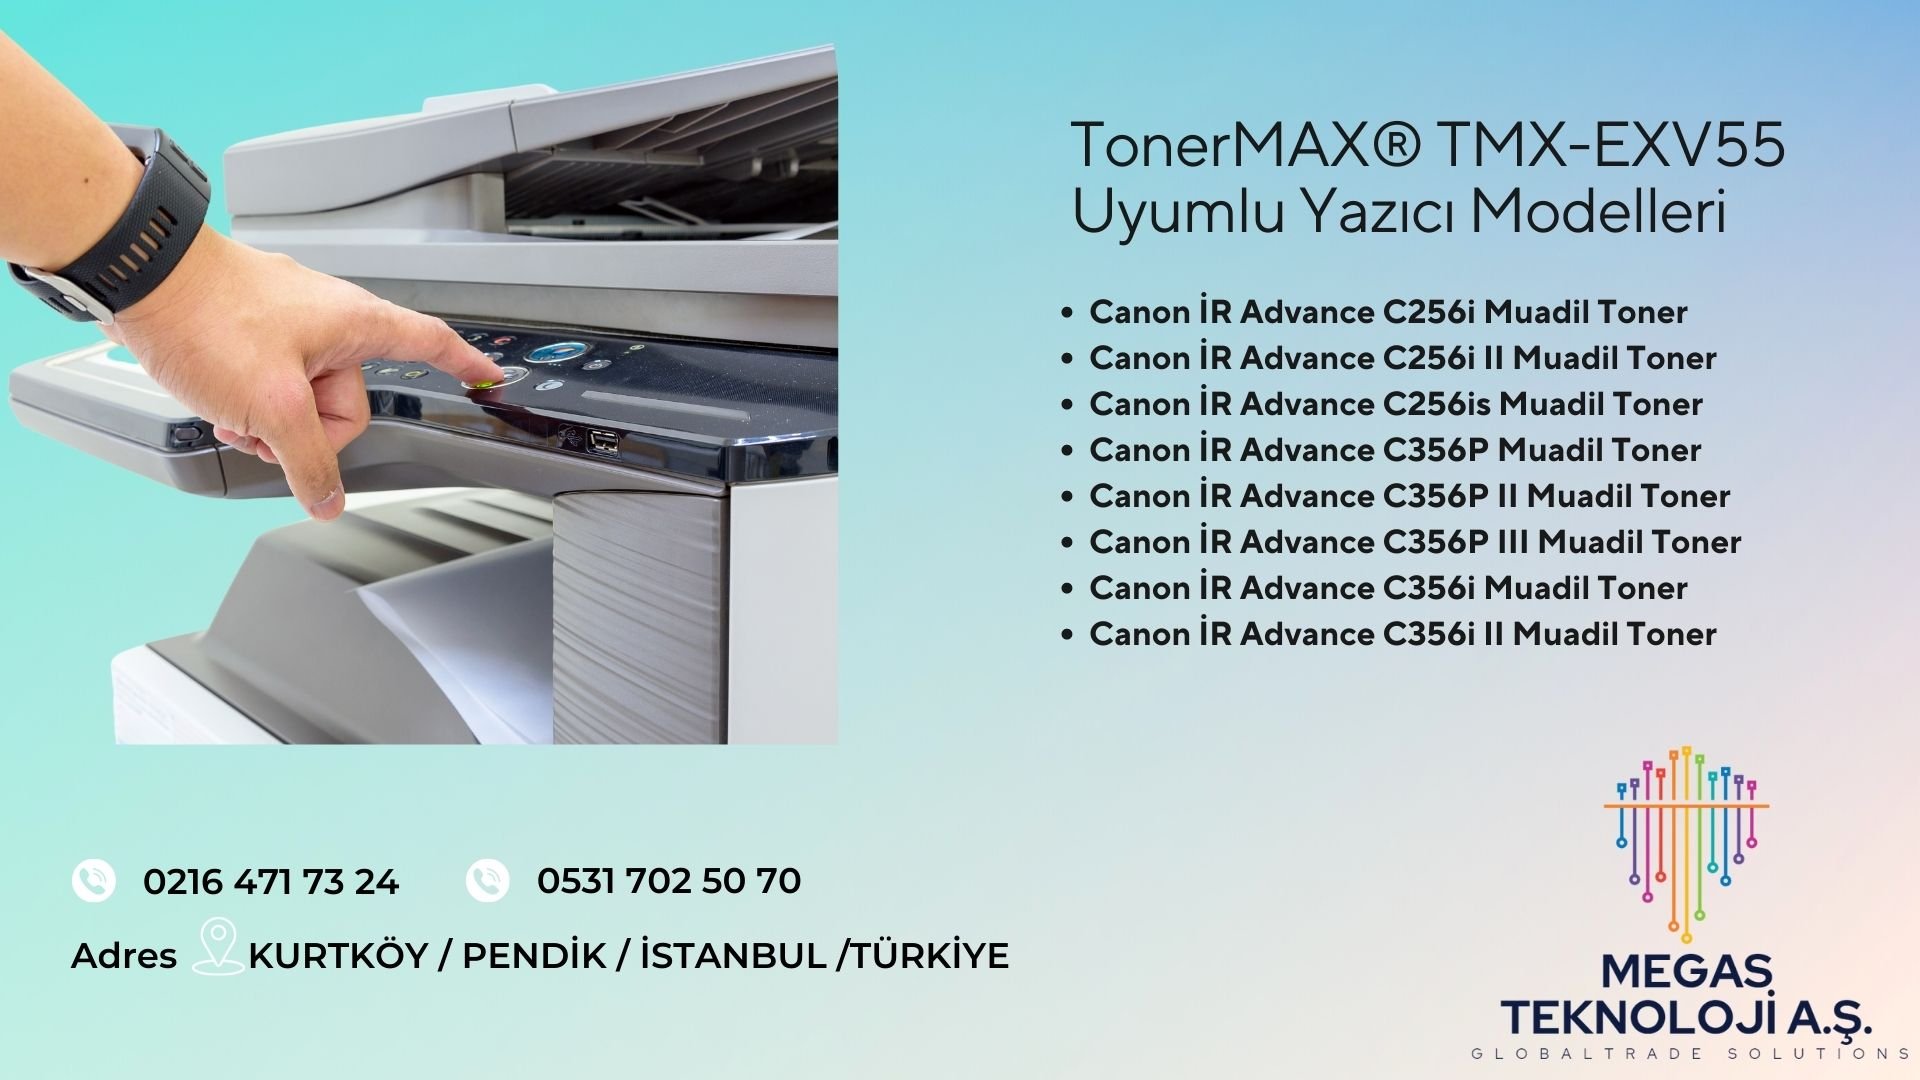 TonerMAX® TMX-55 MUADİL TONER